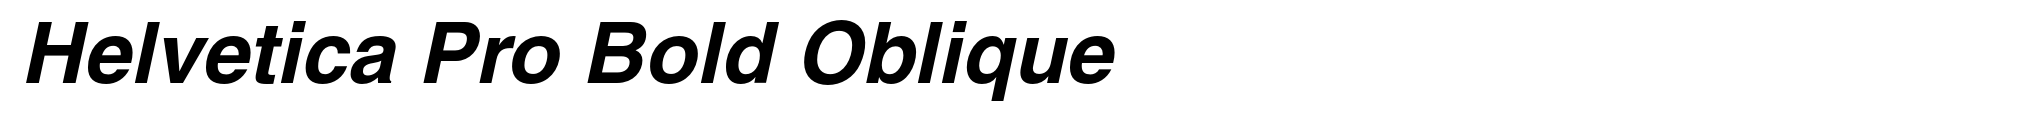 Helvetica Pro Bold Oblique image